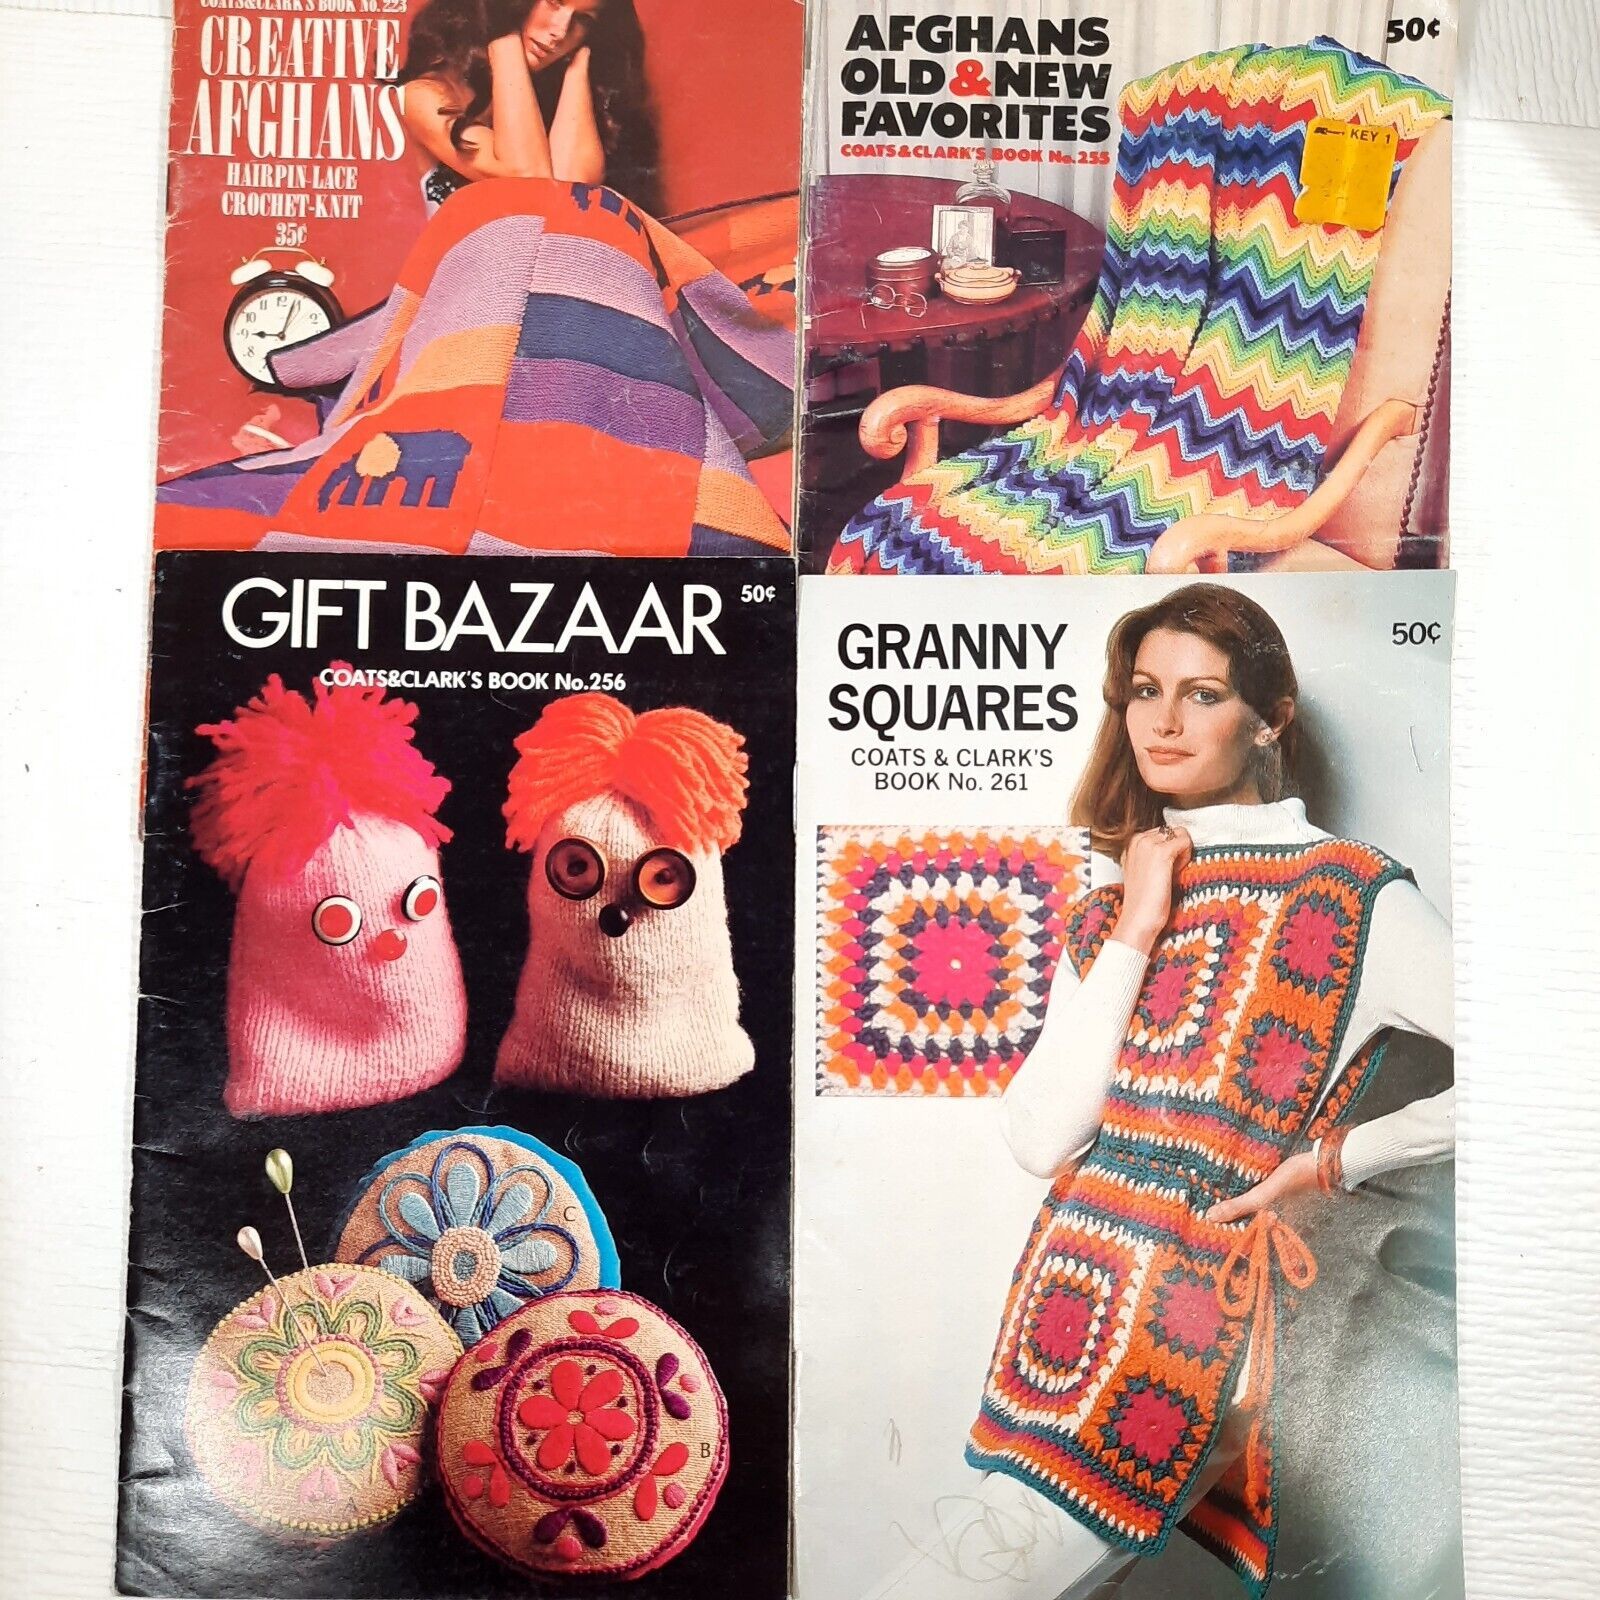 Vintage Coats & Clark's Books Creative Afghans Gift Bazaar Granny Squares 1970s - $32.00